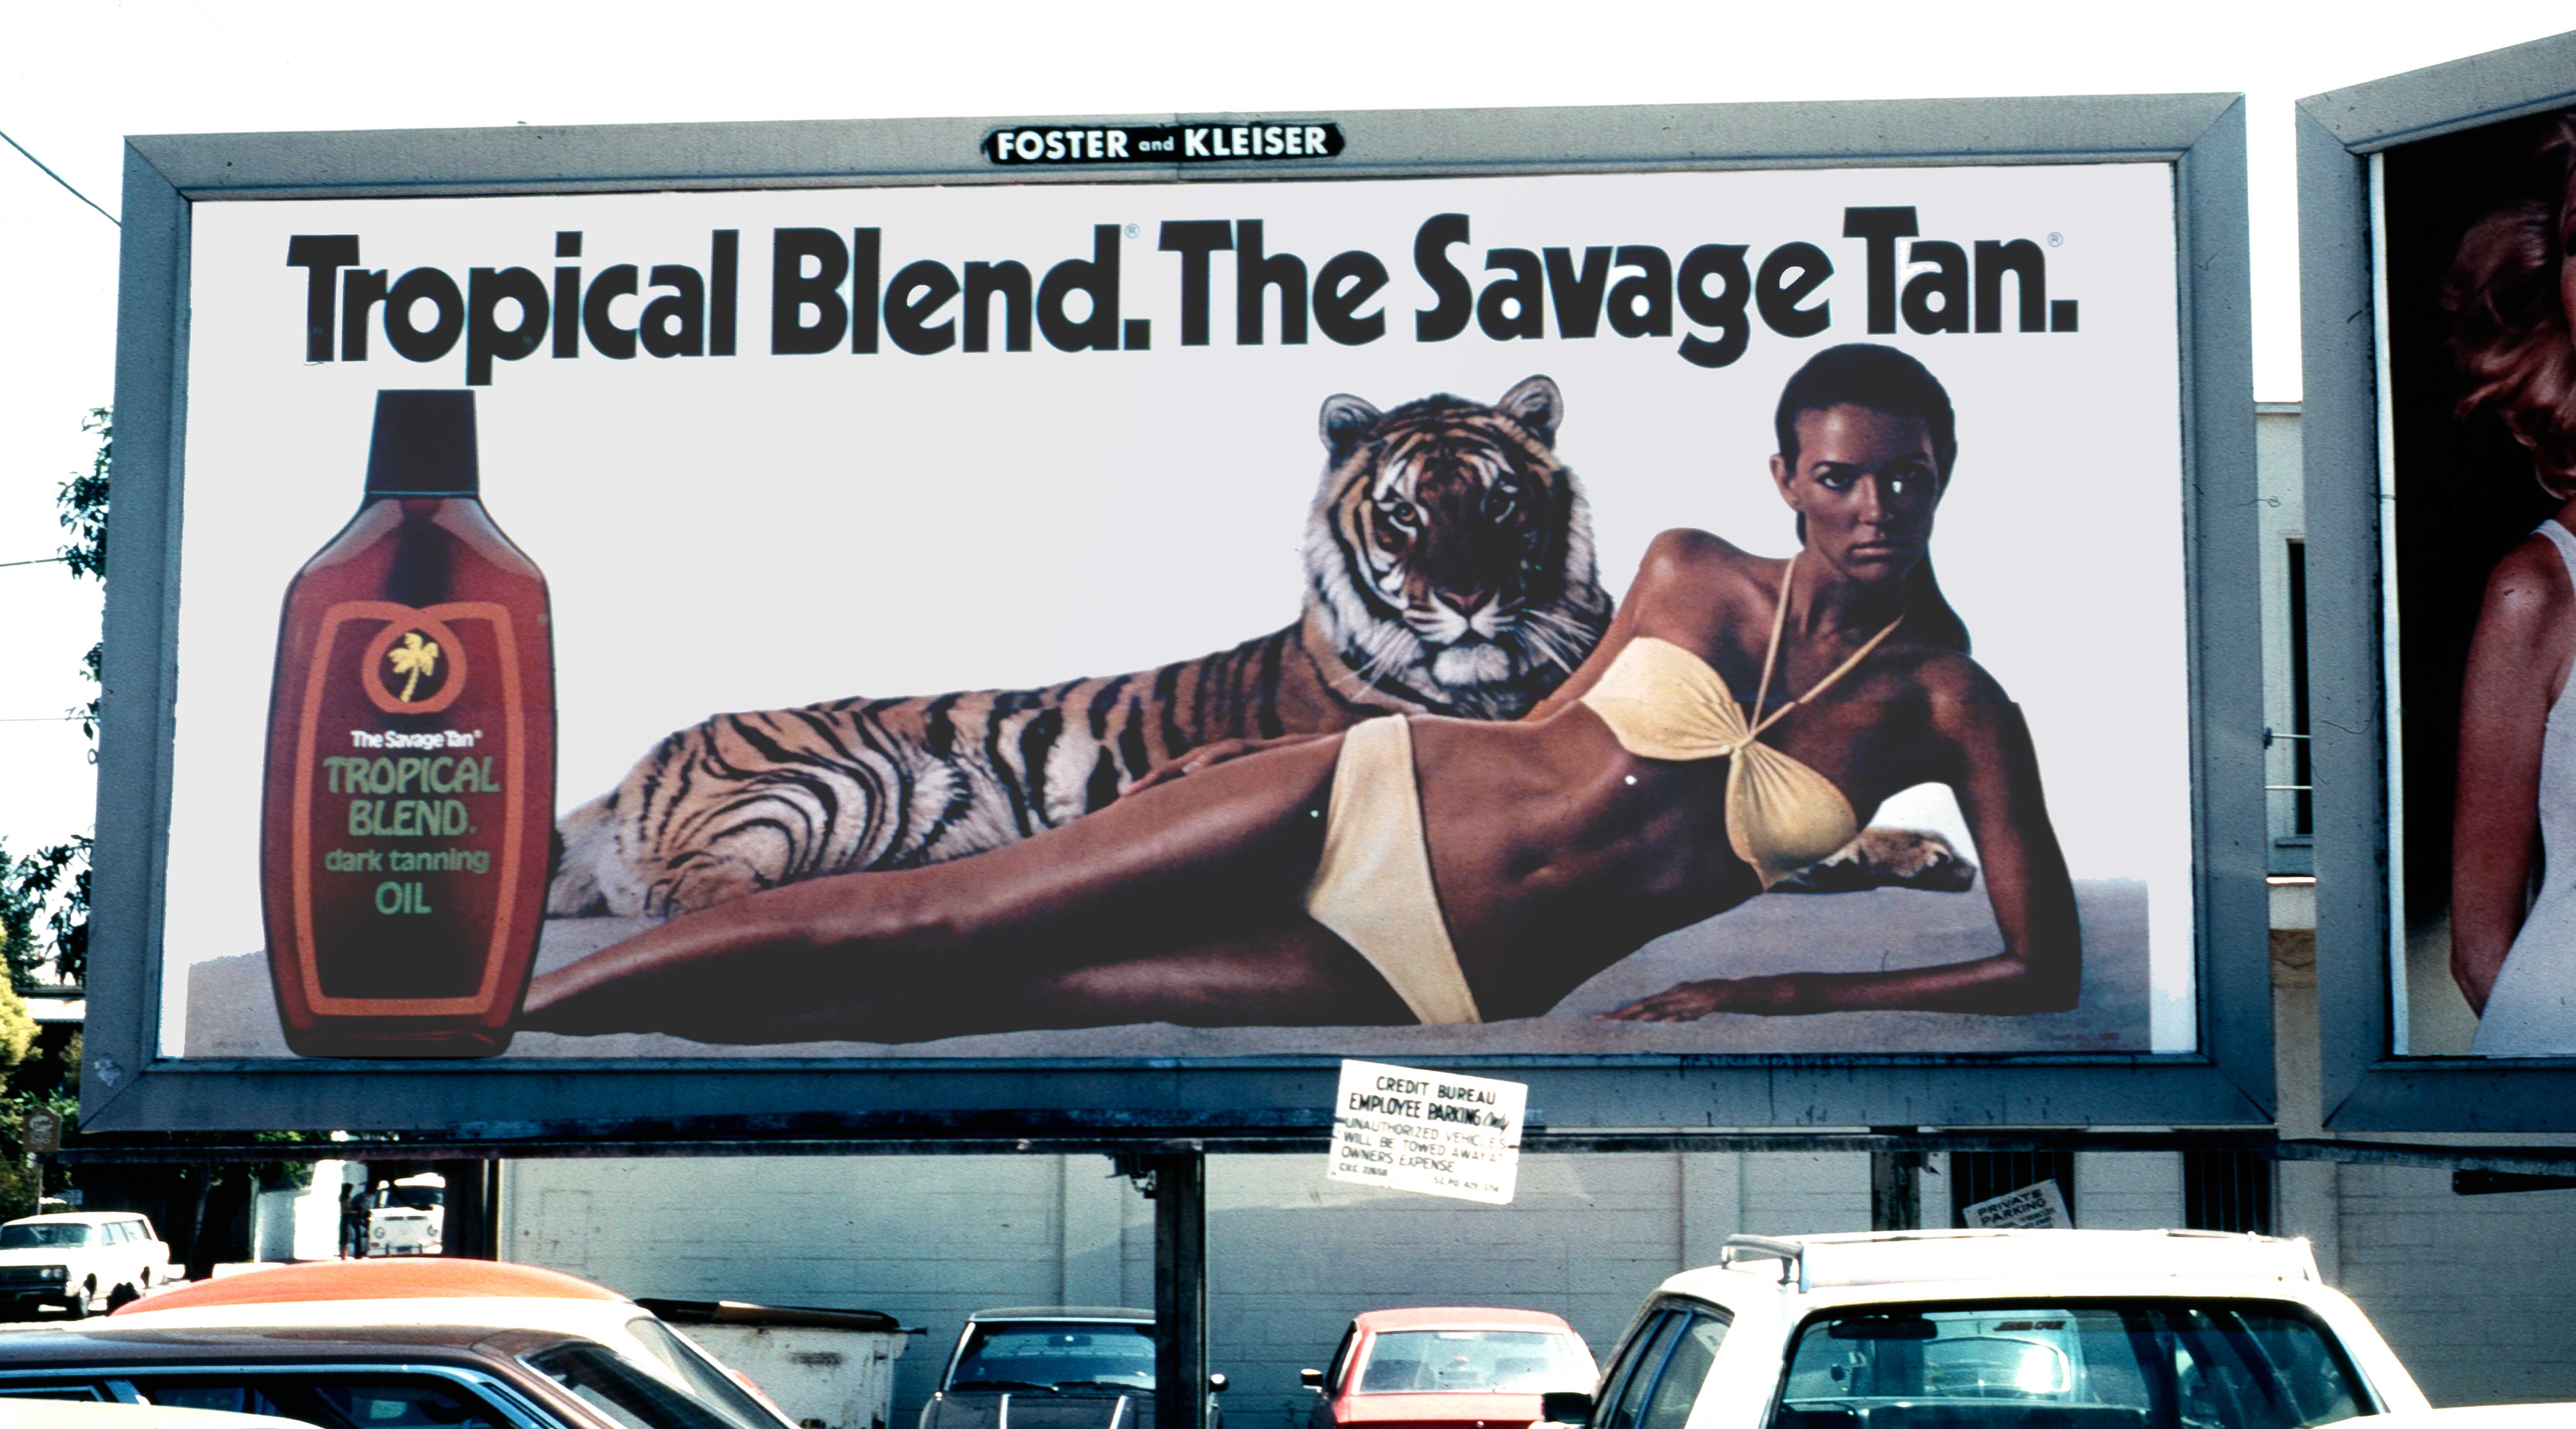 typical-Blend-billboard-before